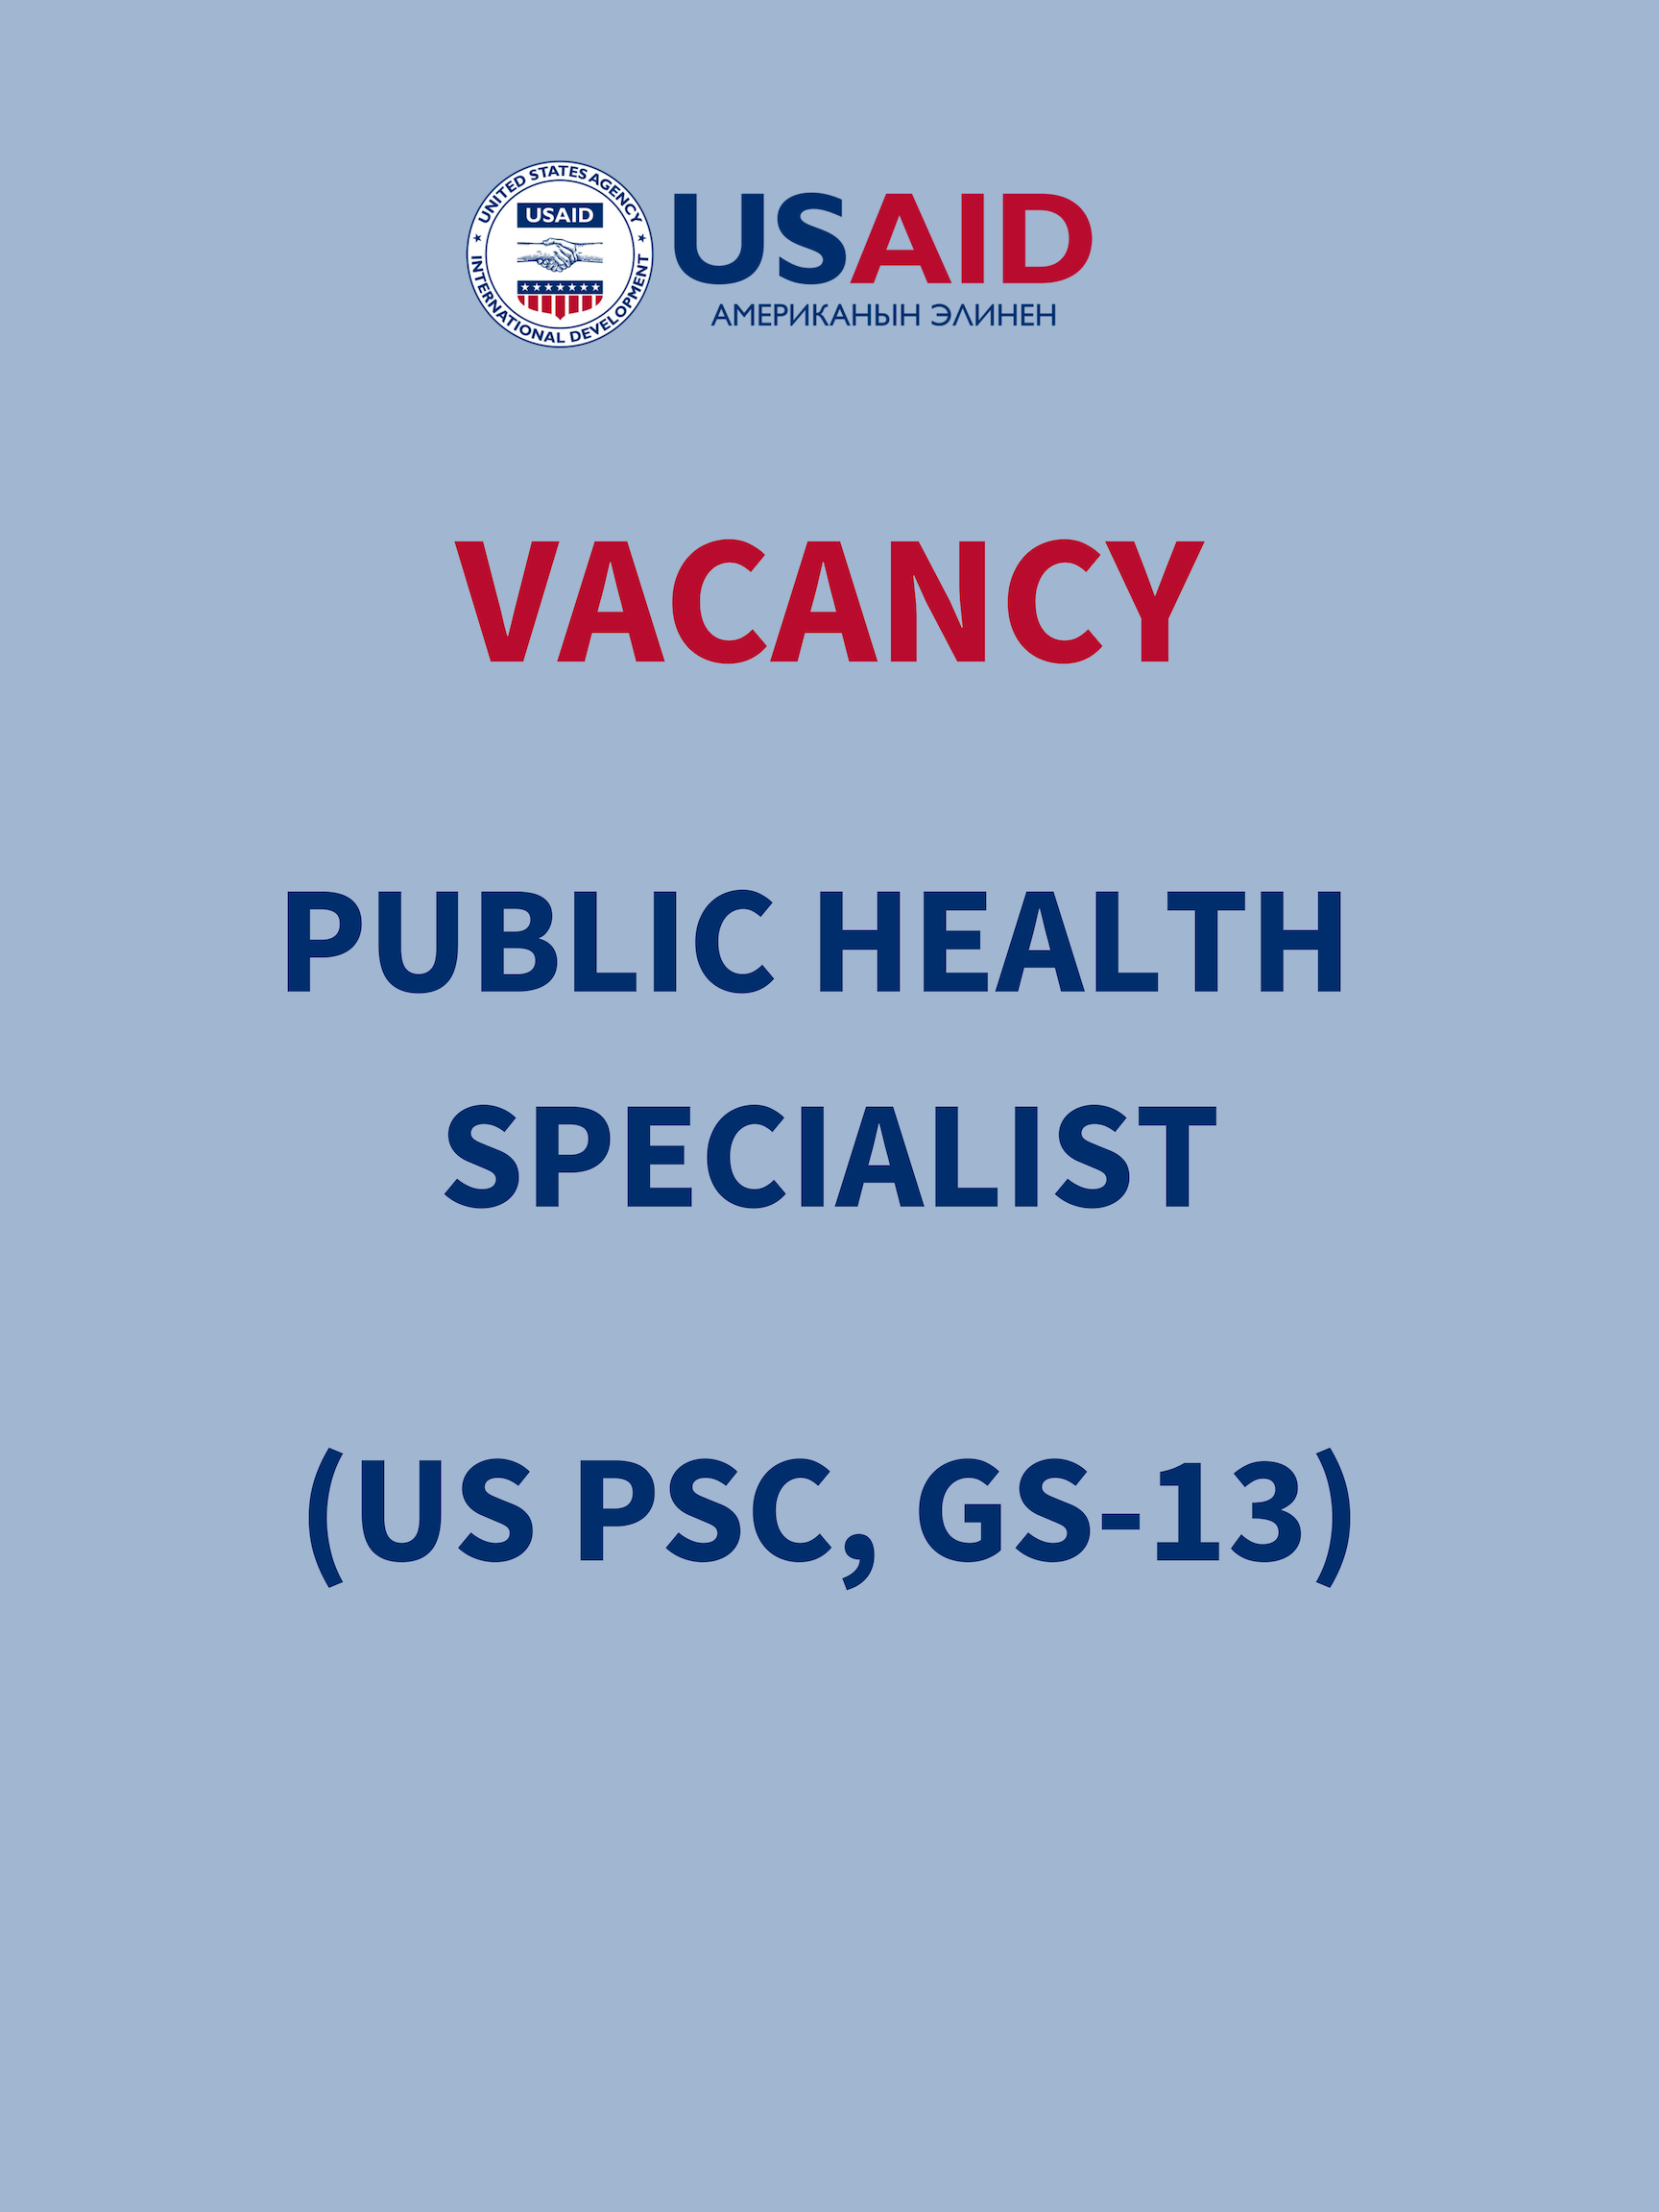 Public Health Specialist vacancy announcement.